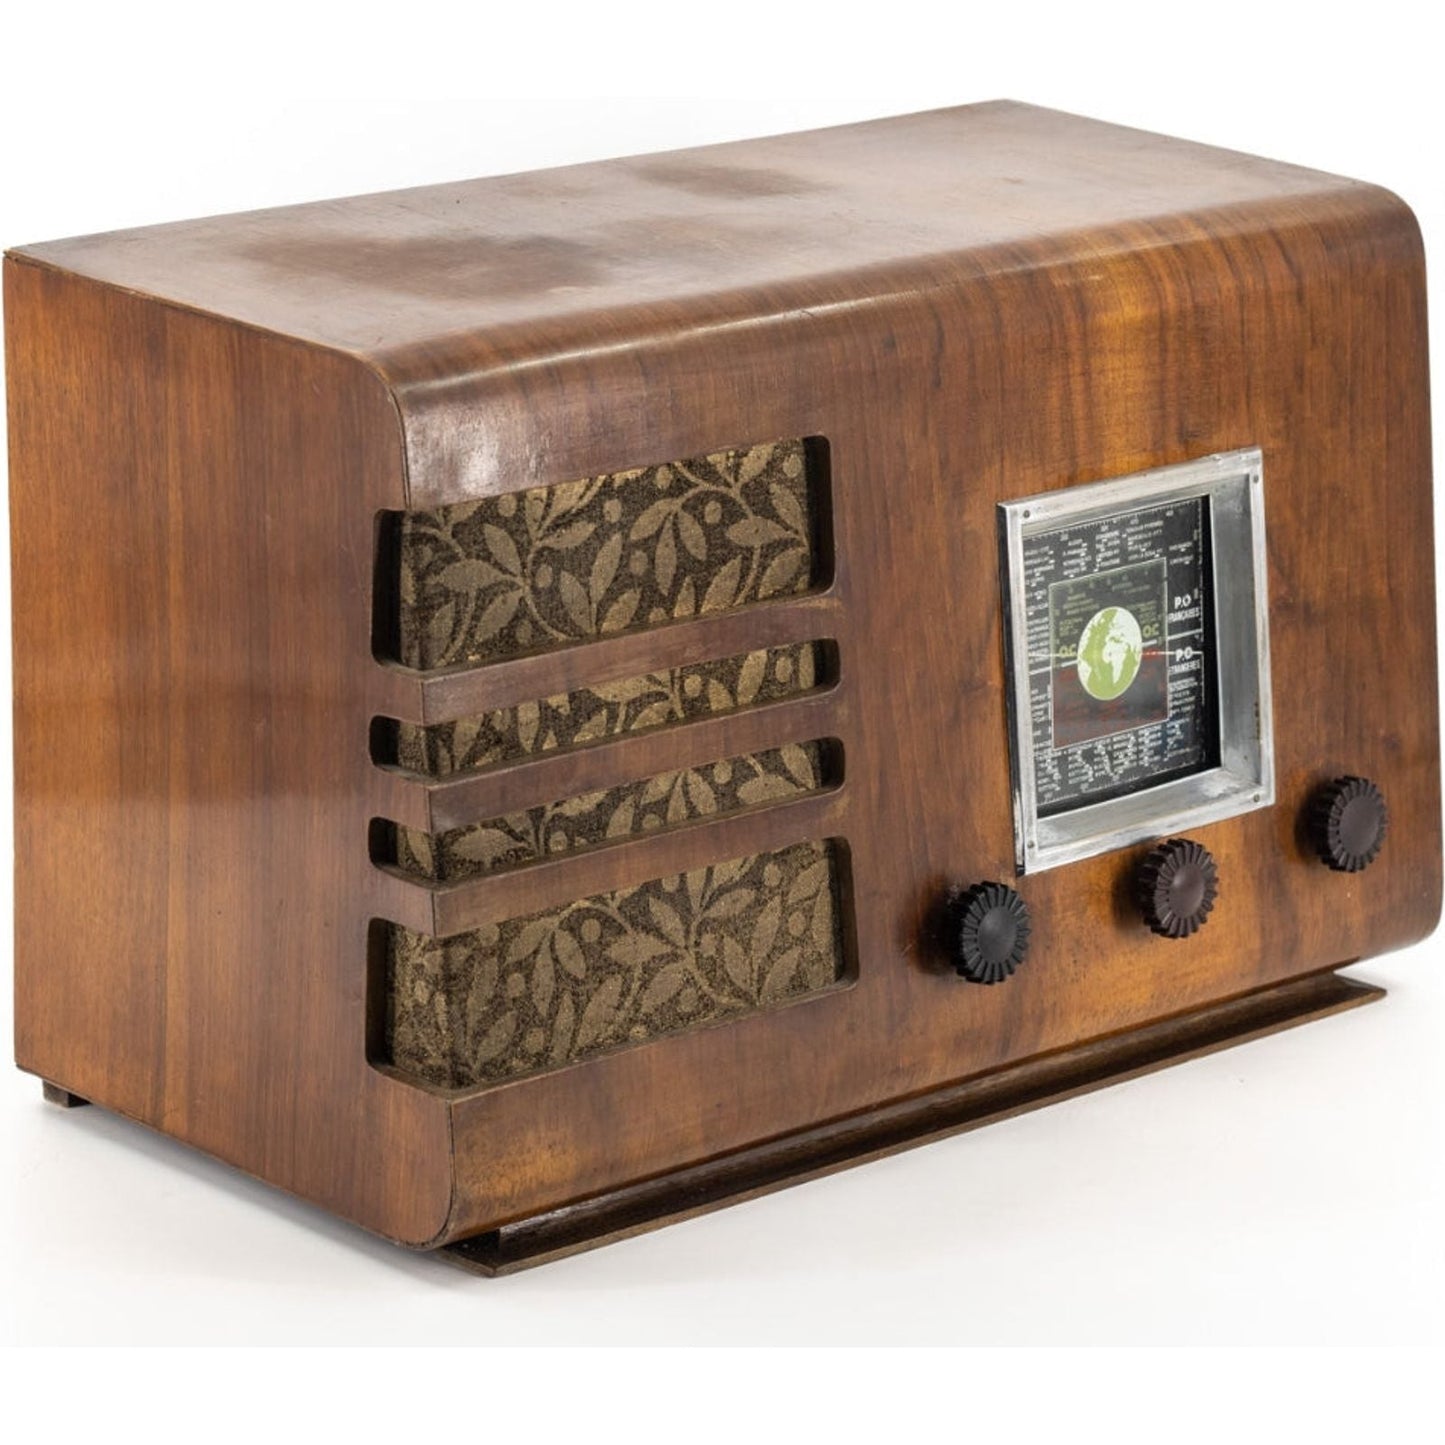 Radio Bluetooth Artisanale Vintage 40’S - A.bsolument - absolument -radio - vintage - prodige - bluetooth